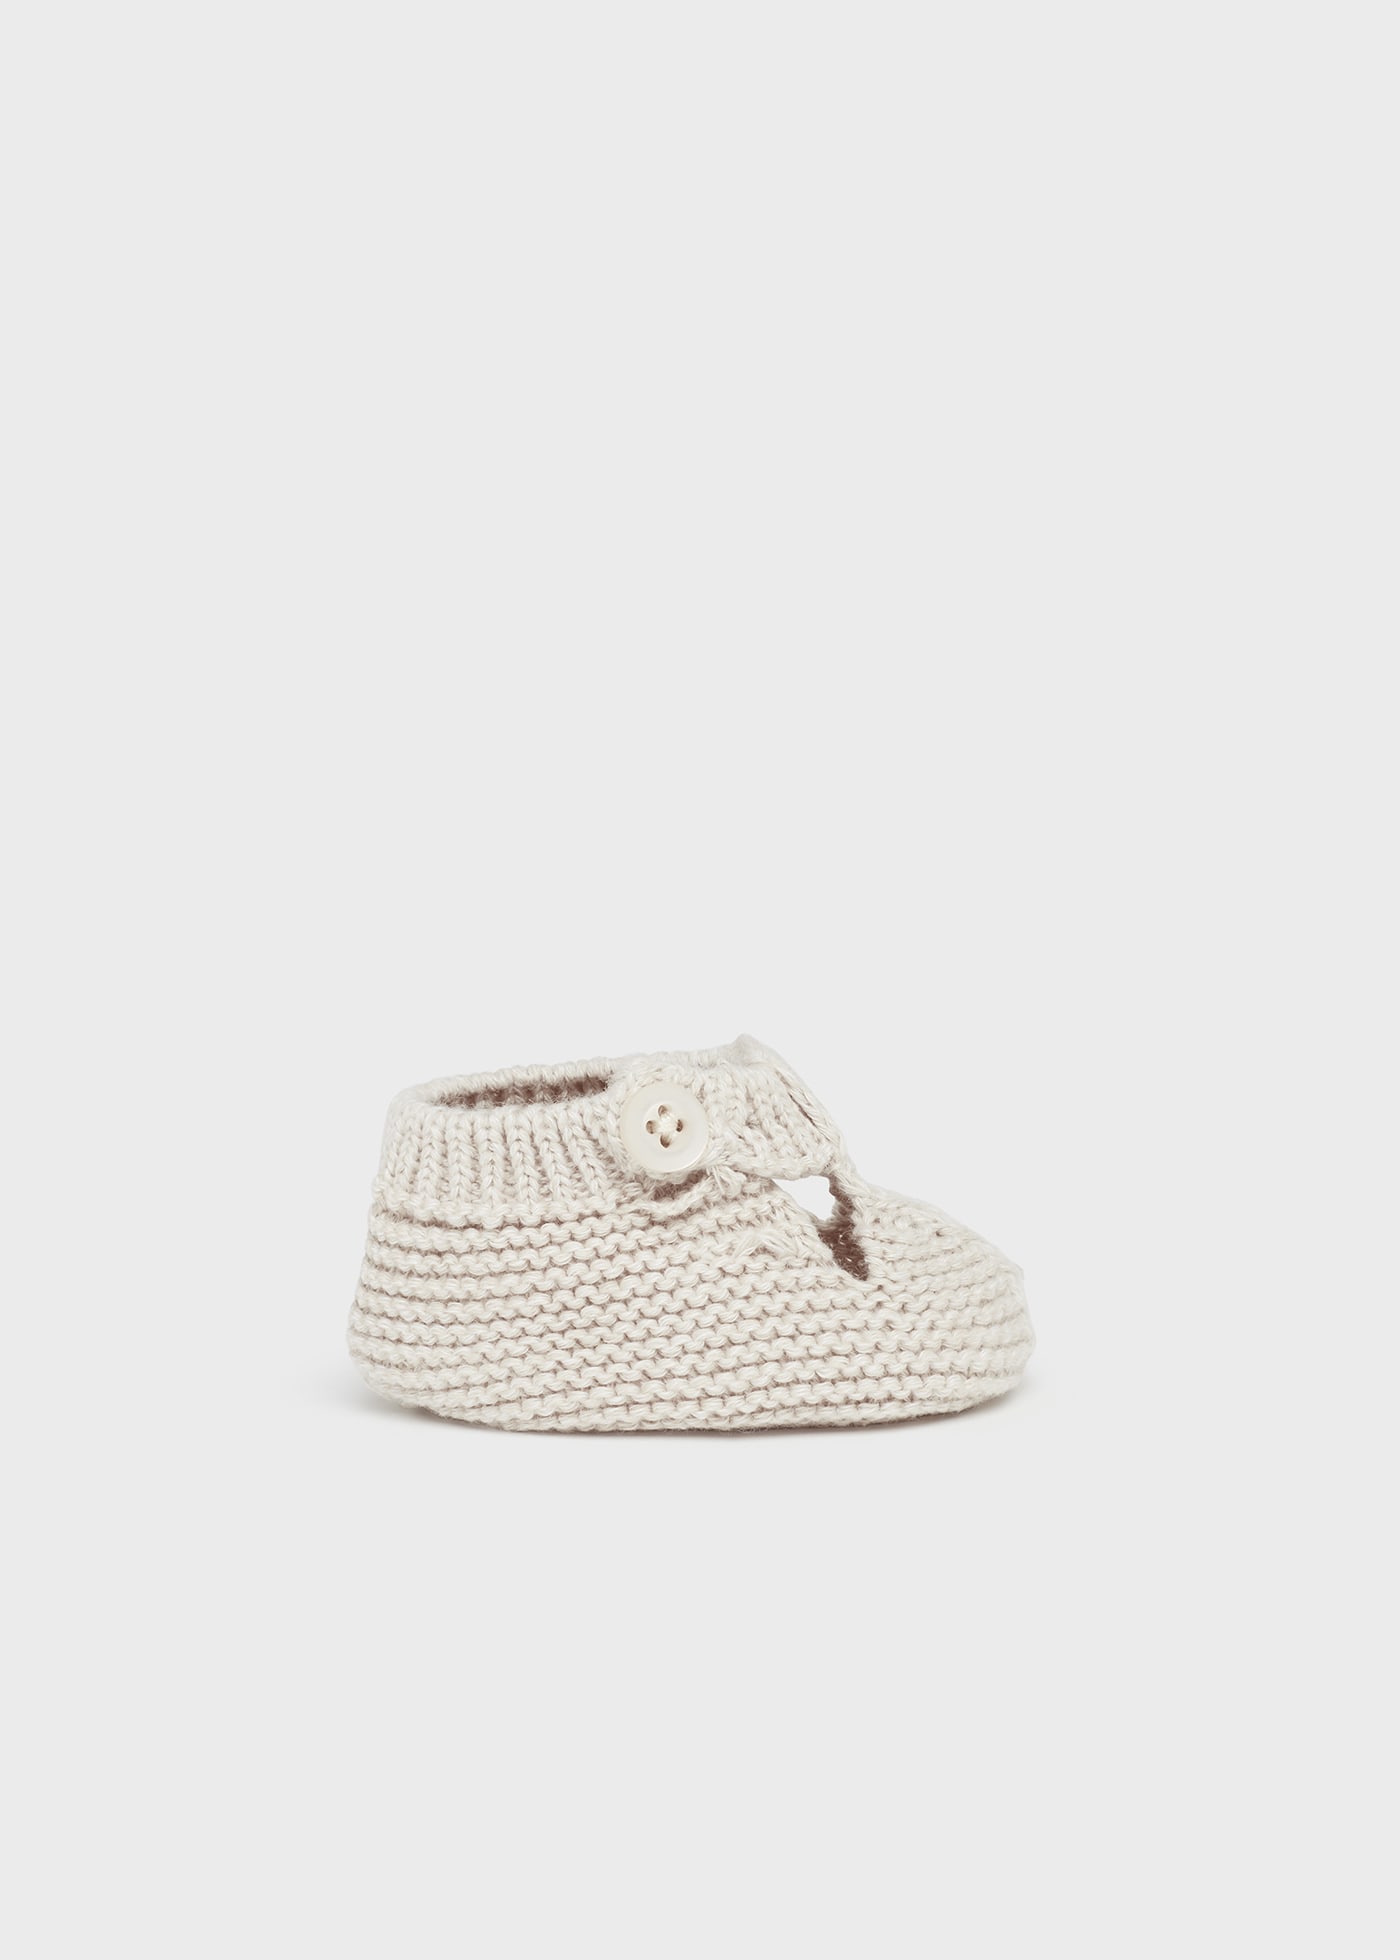 Crochet Baby Boy Shoes, Newborn Booties, Unique baby gift, Gender neutral  baby | eBay